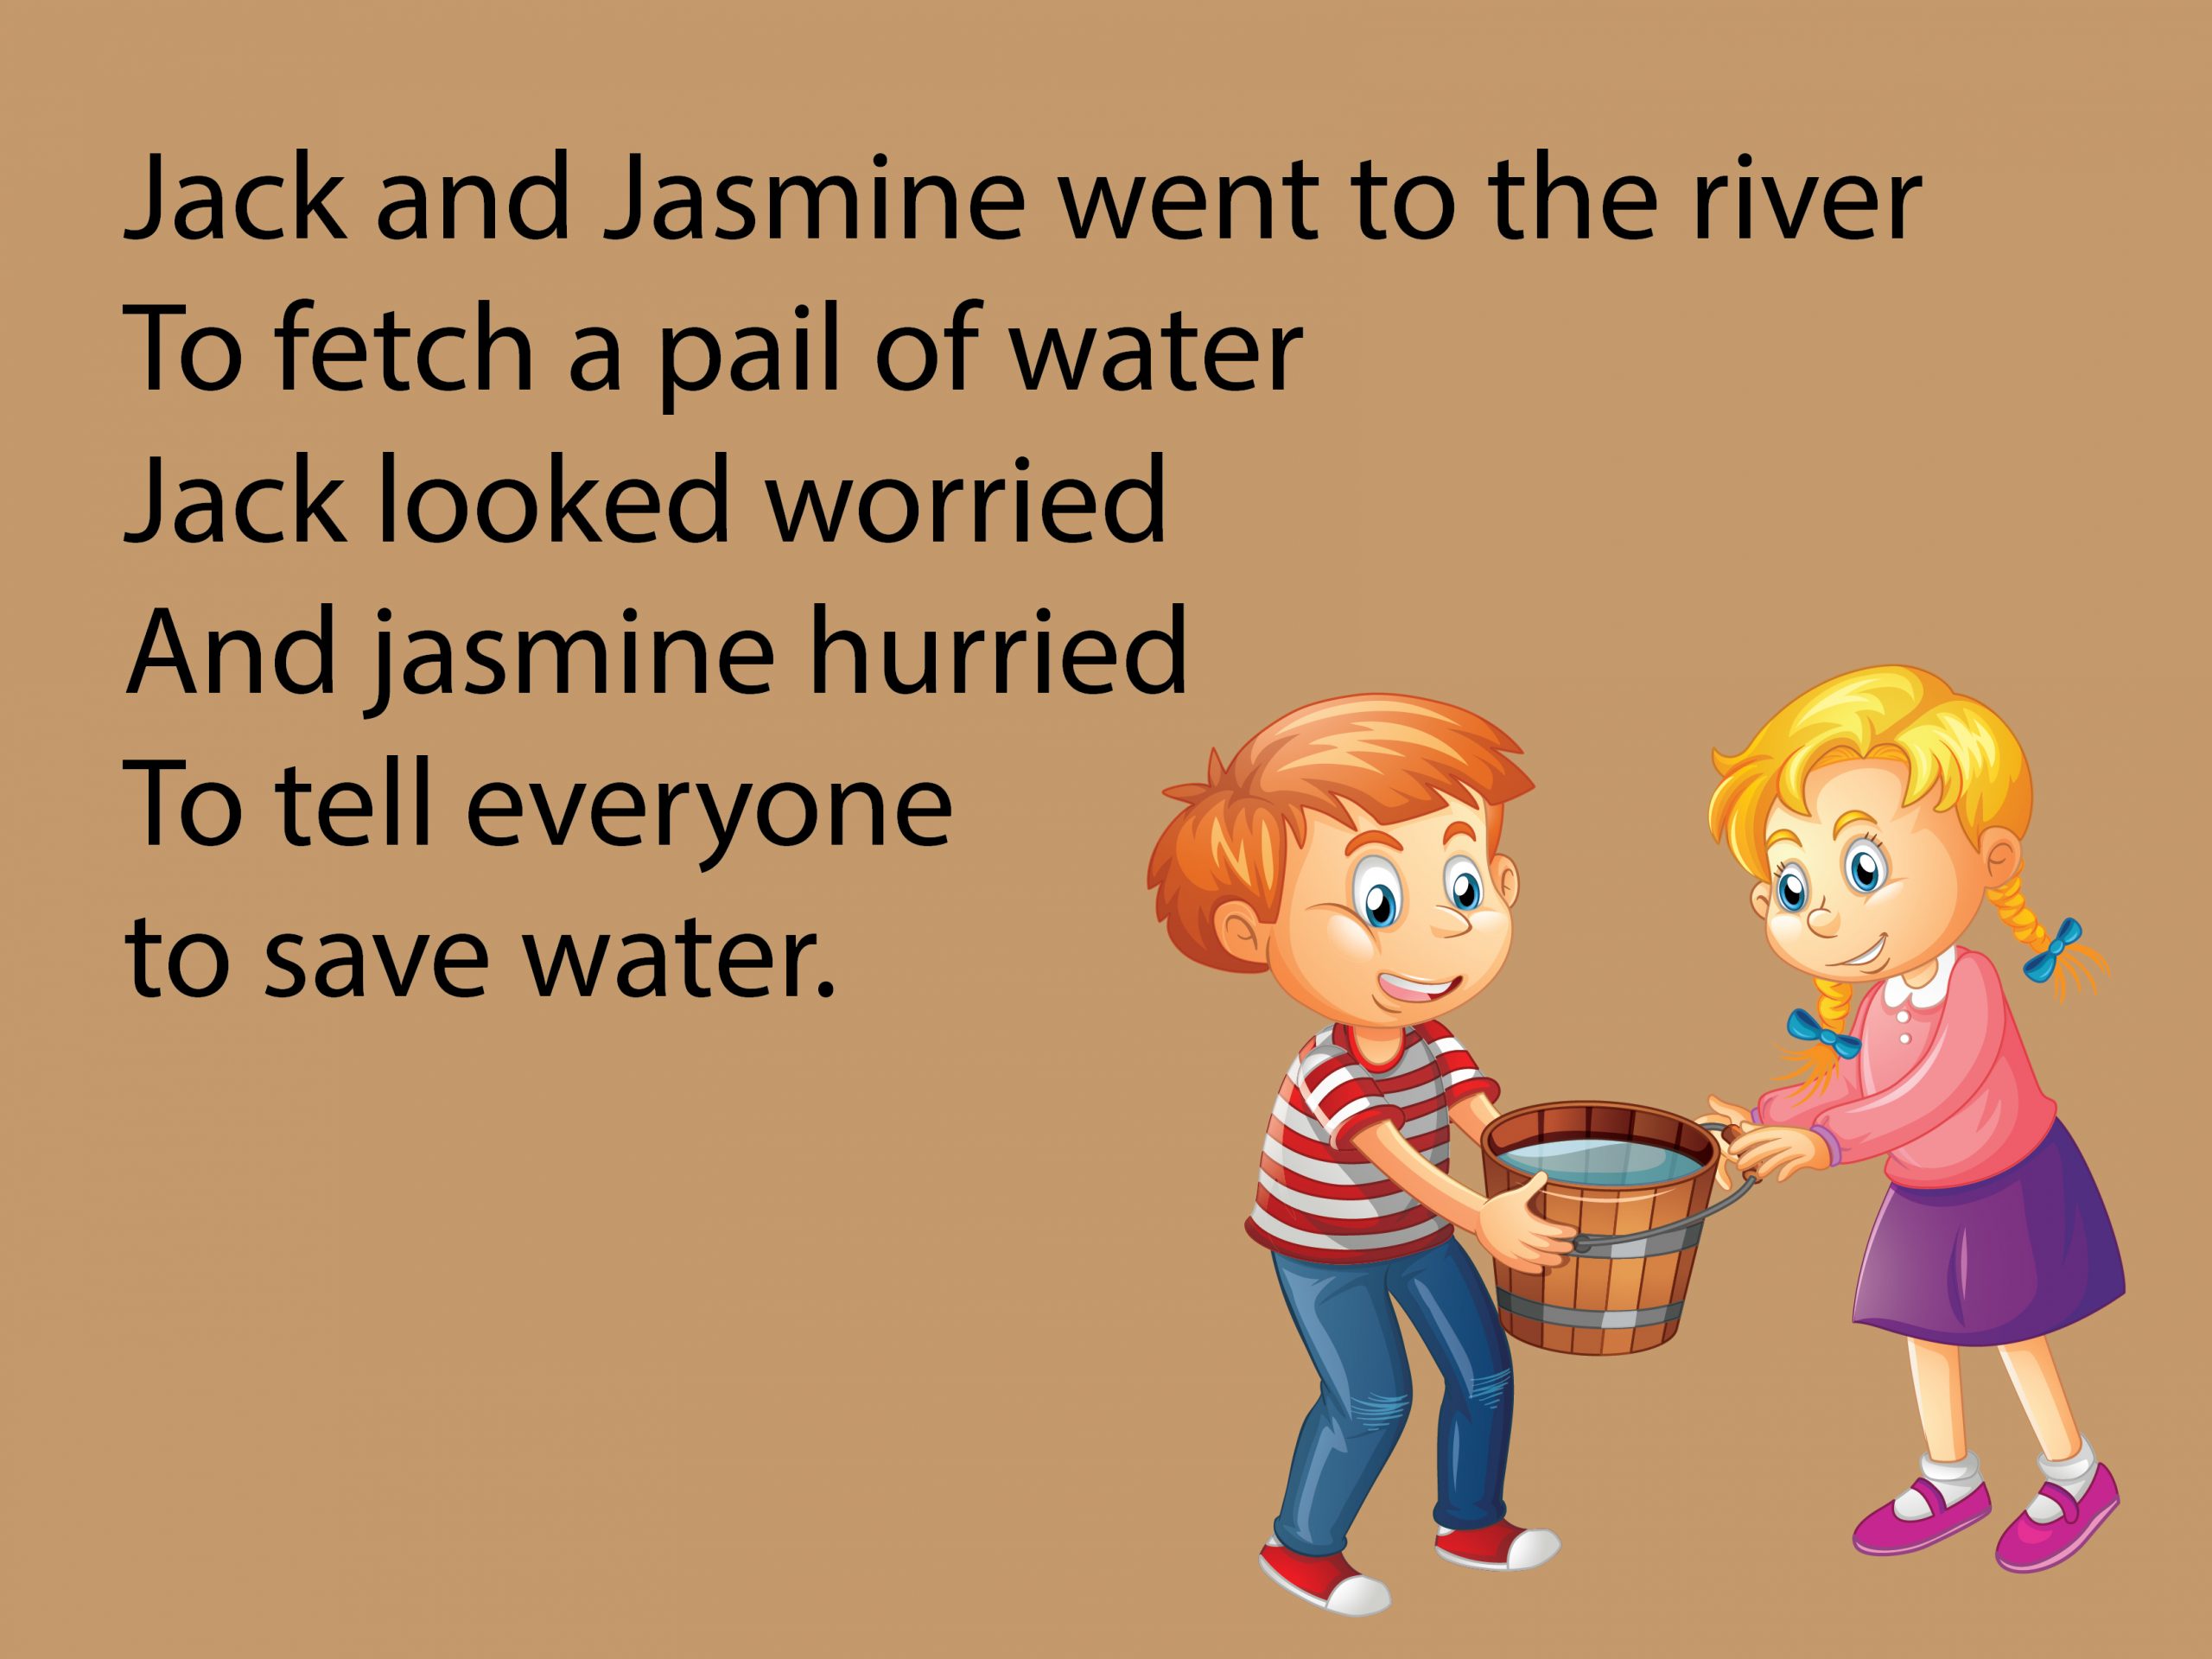 Jack and Jasmine